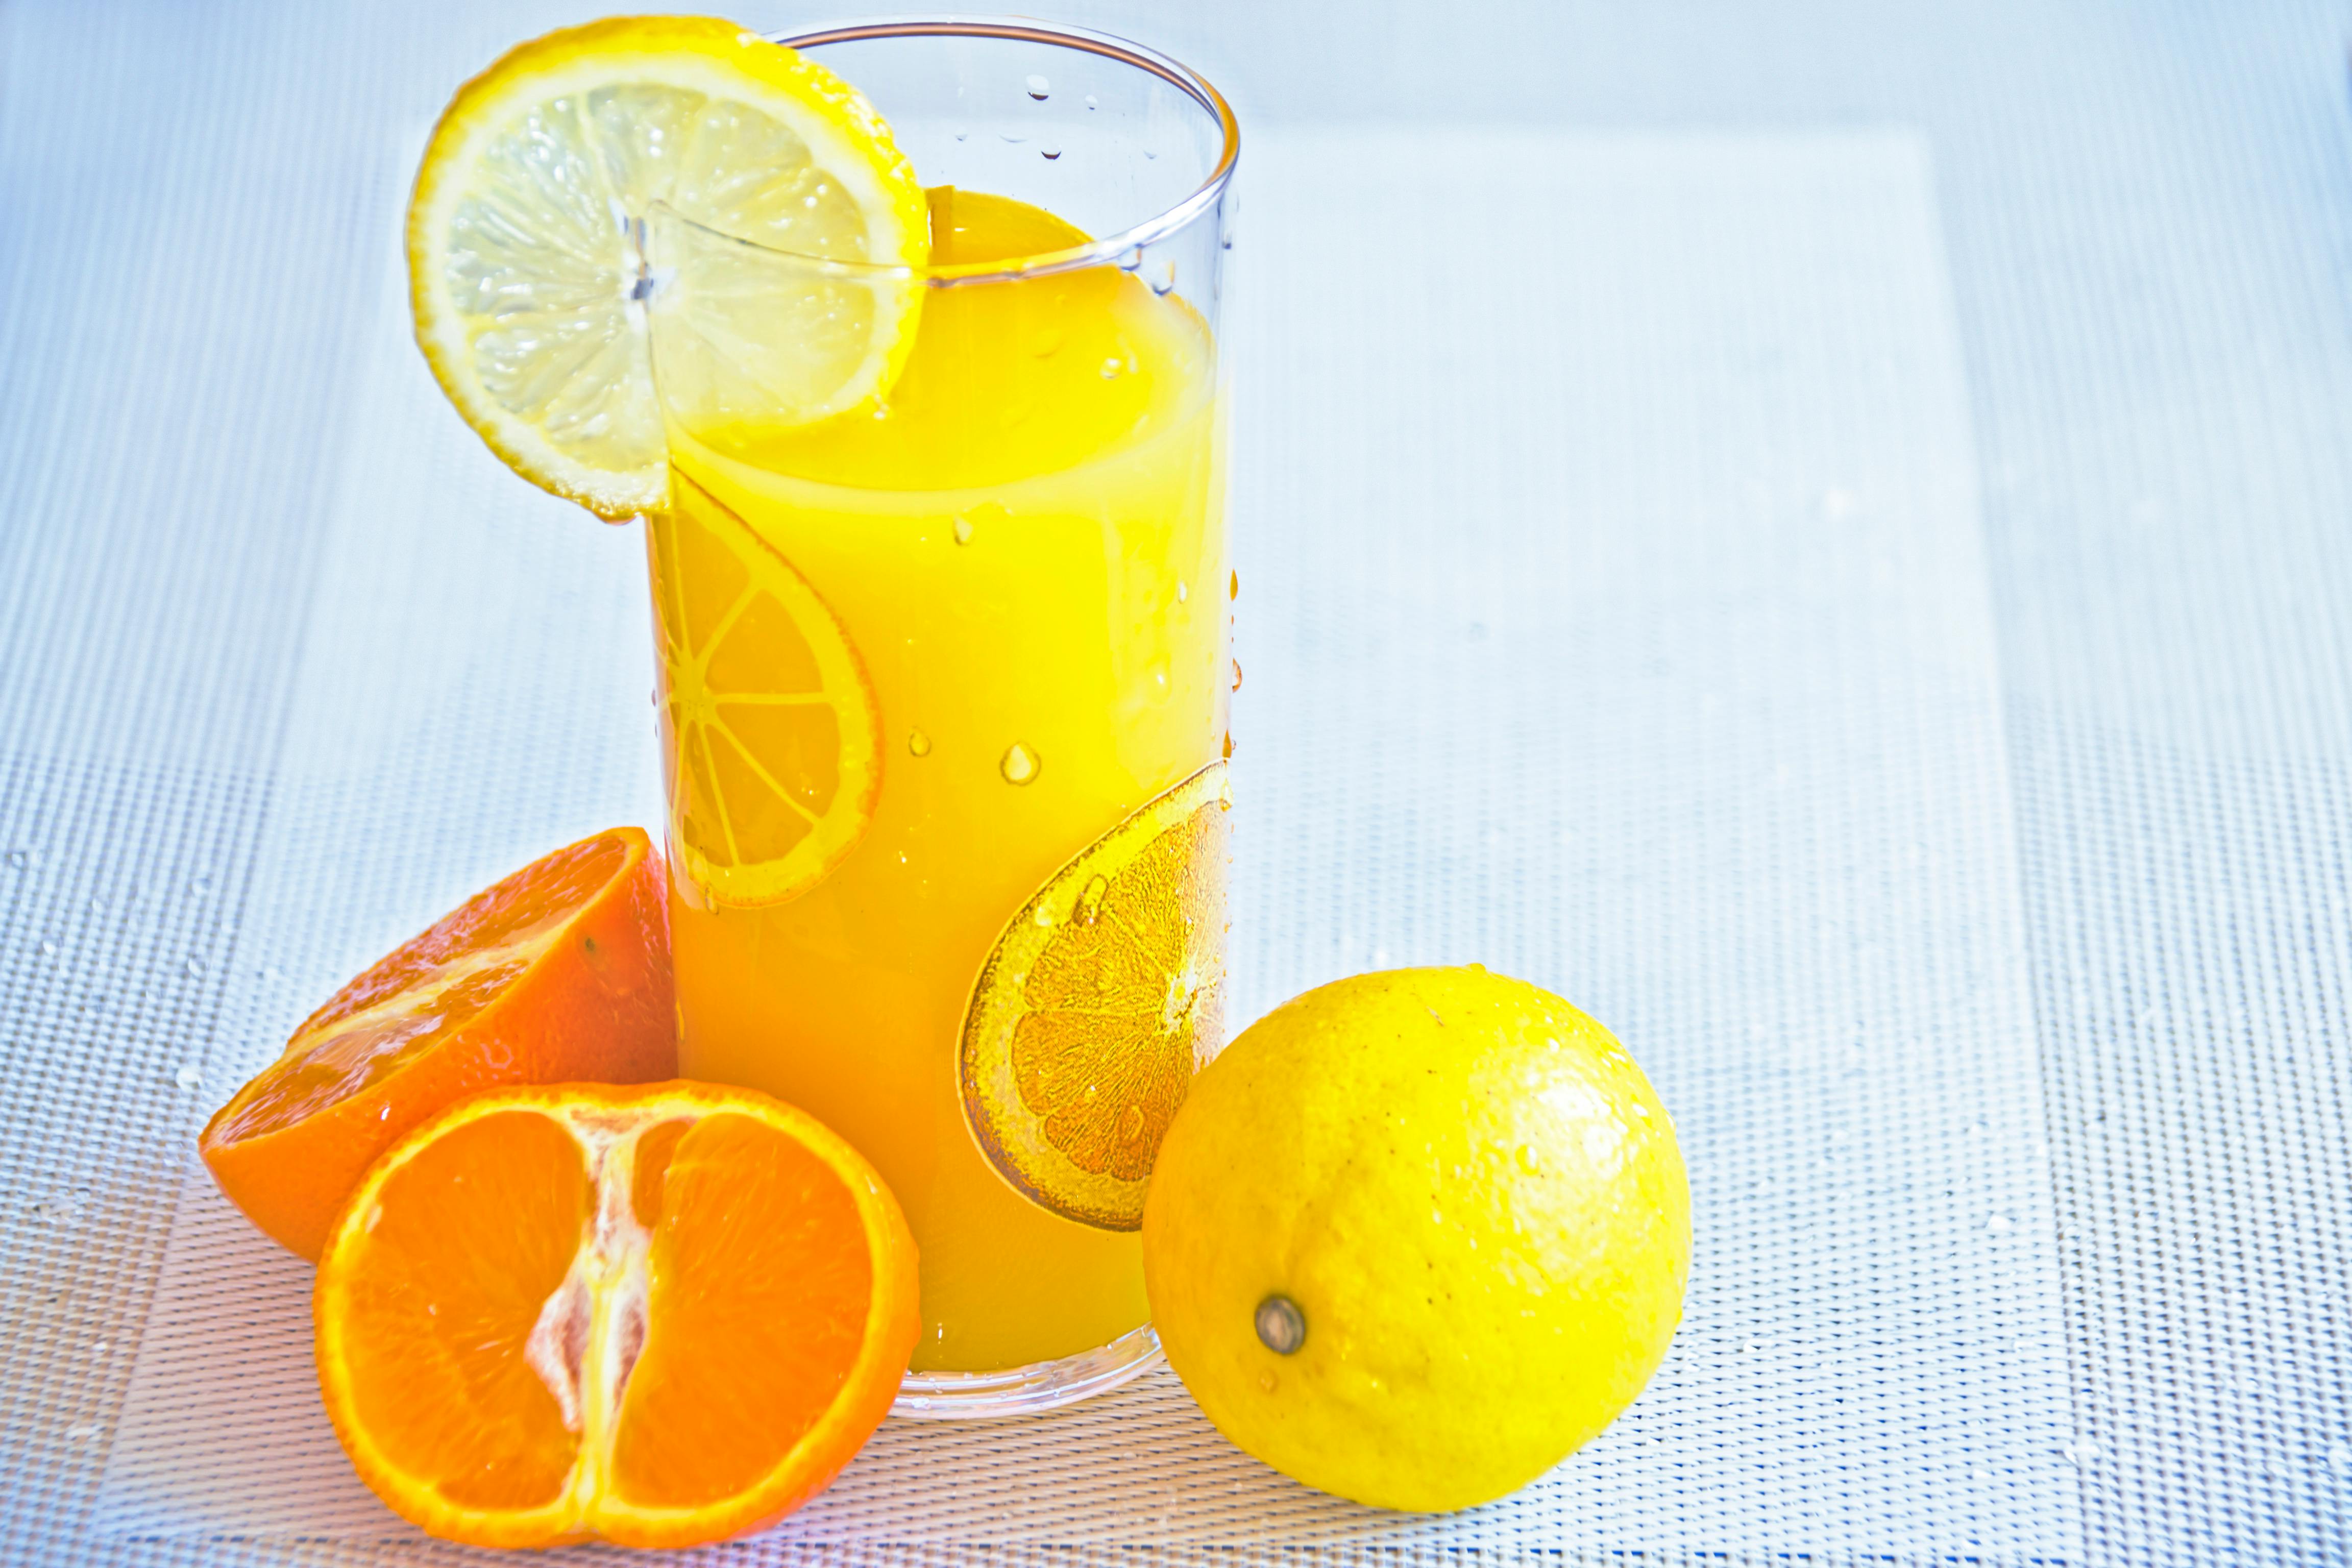 Glass of Lemon Juice · Free Stock Photo